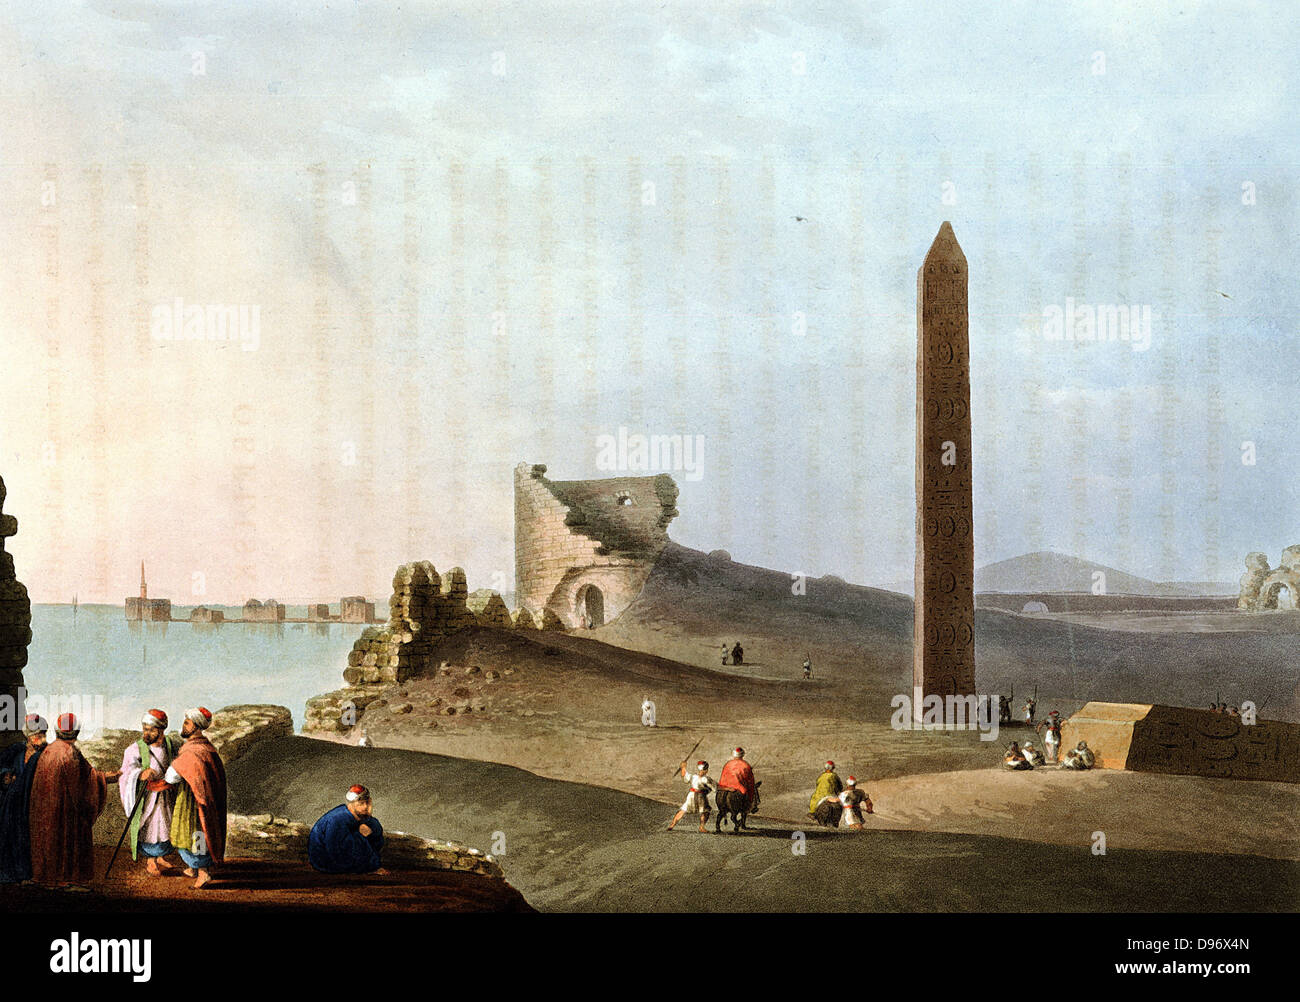 Les obélisques d'Alexandrie, appelés les aiguilles de Cléopâtre. L'aquatinte de 1802 après l'original par Luigi Mayer. Banque D'Images